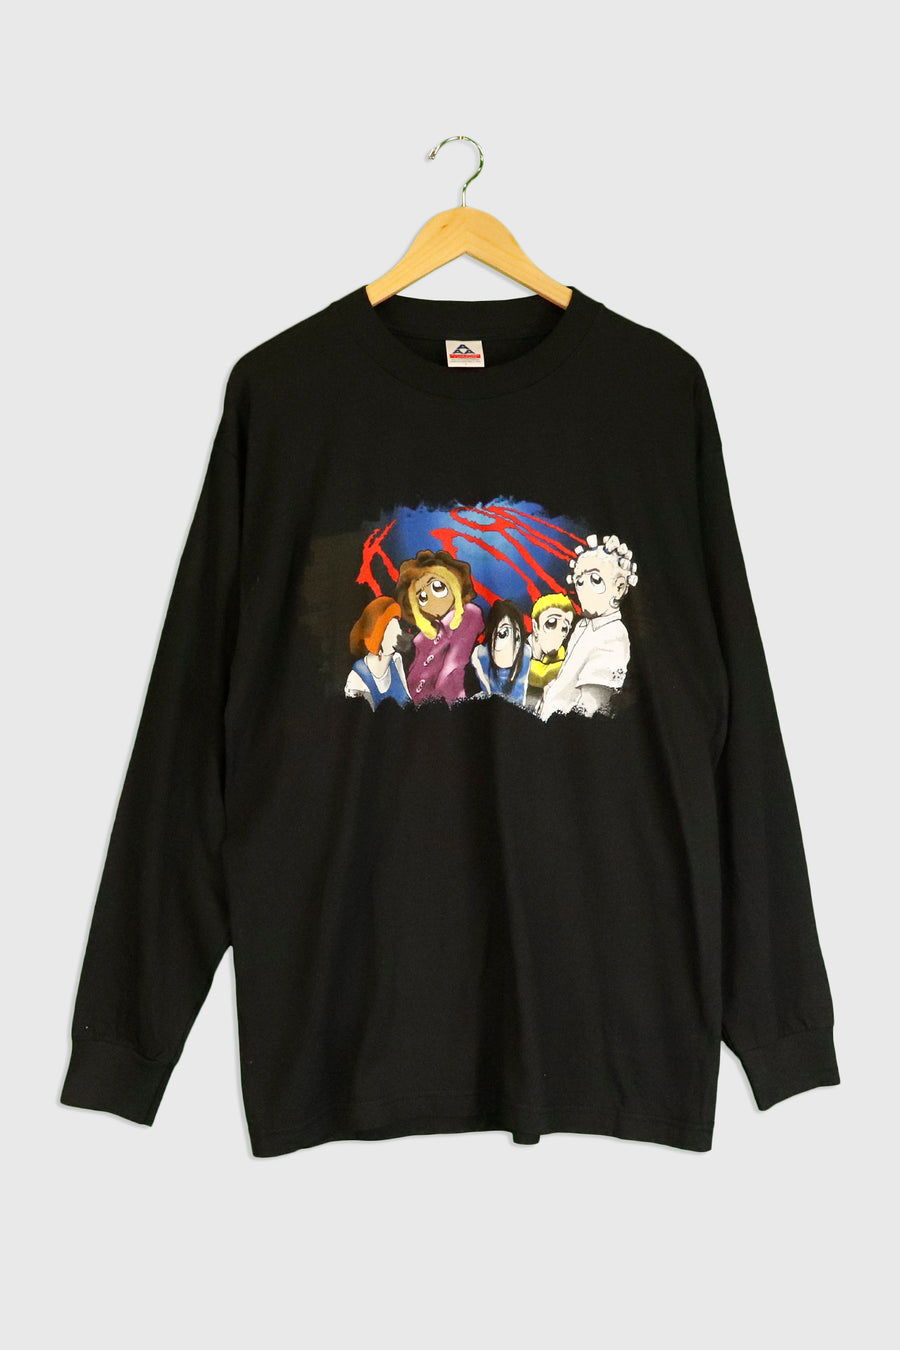 Vintage Korn Animated Band Long Sleeve T Shirt Sz L